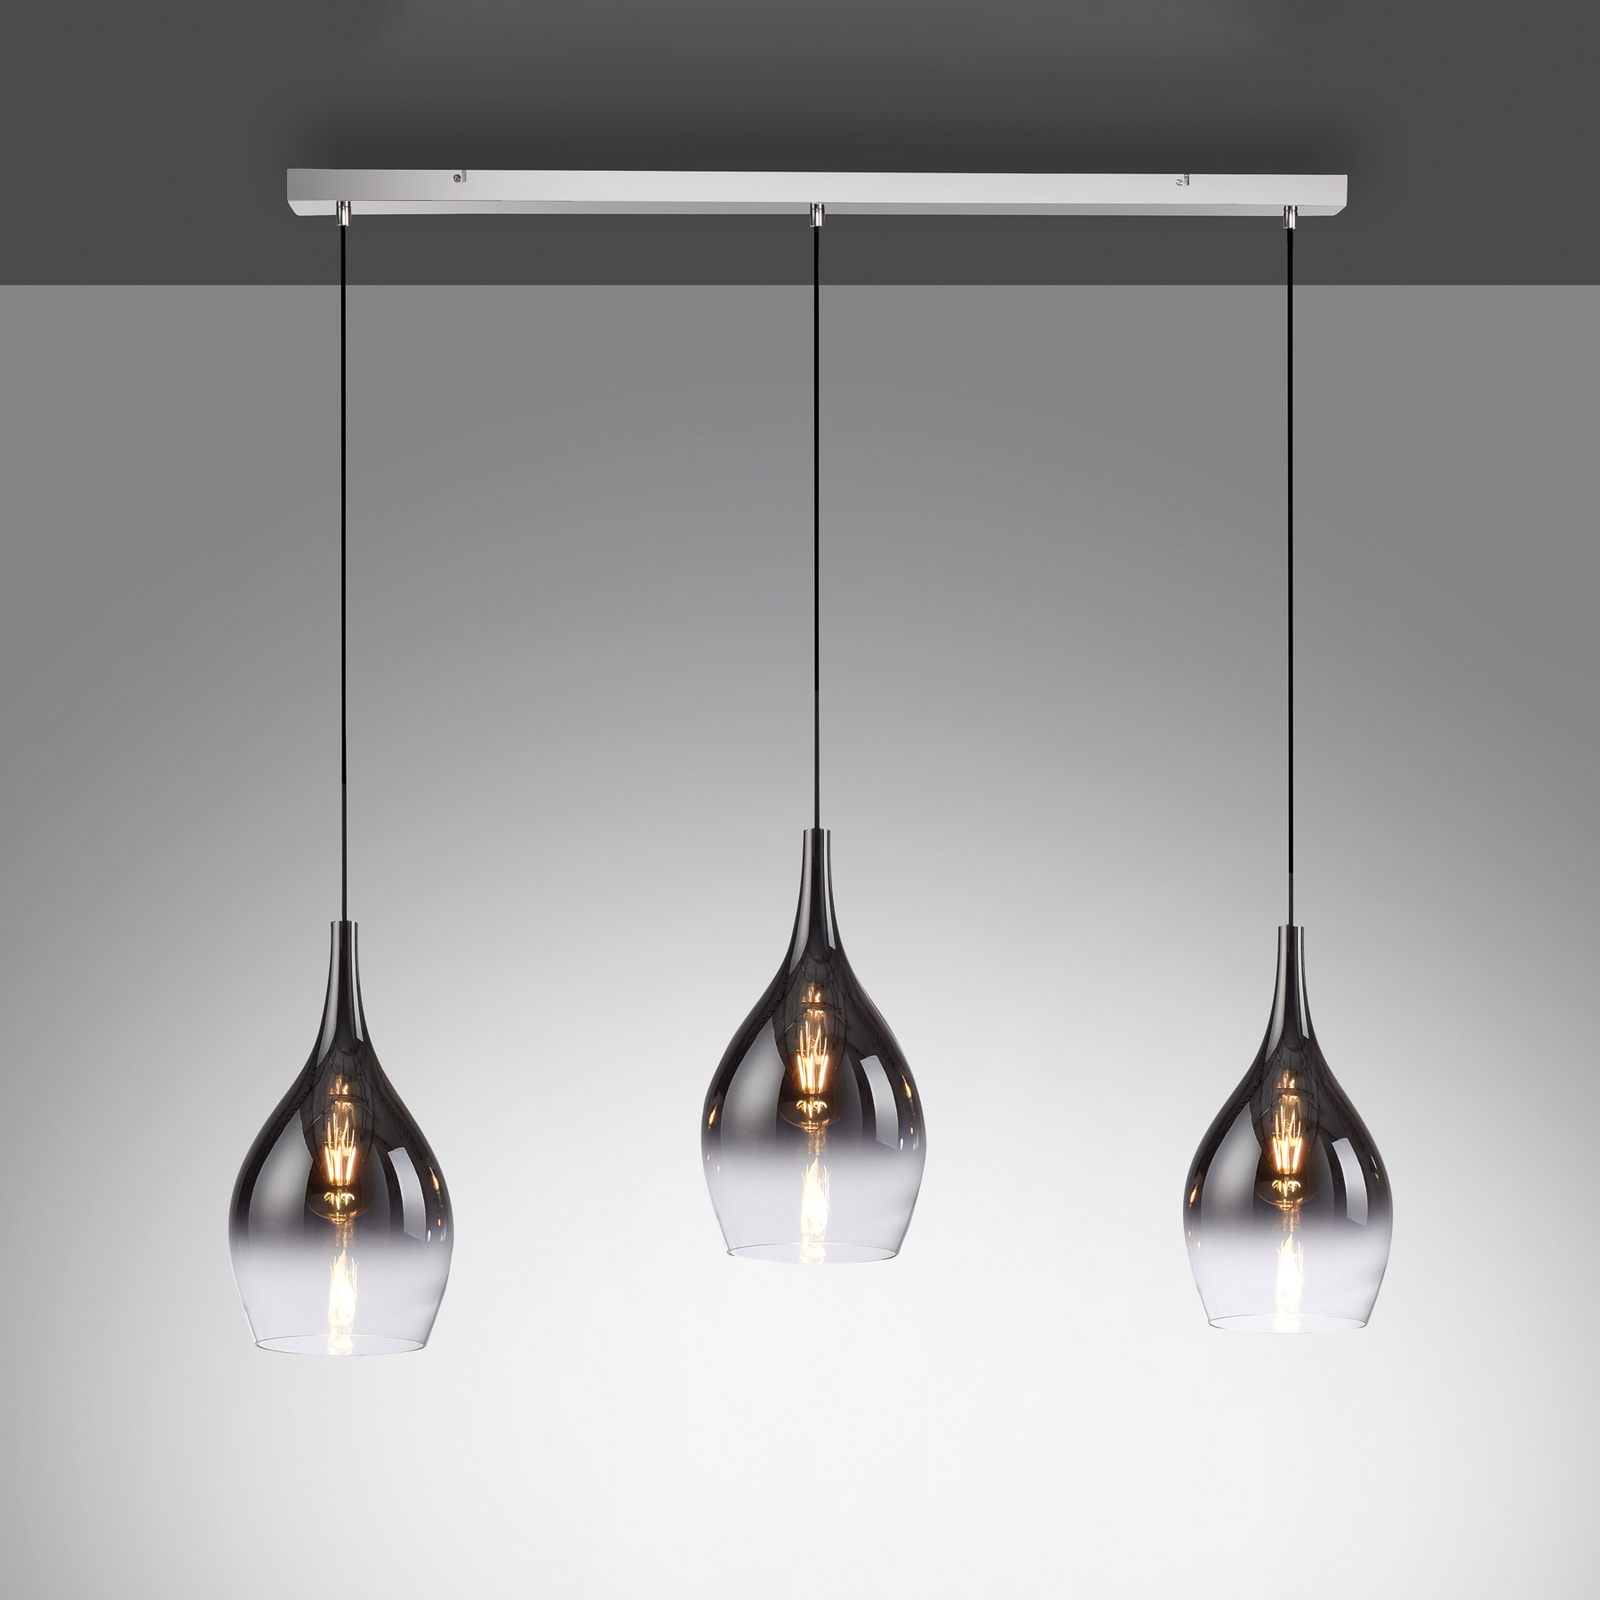 Pilua pendant light, three-bulb, angular canopy